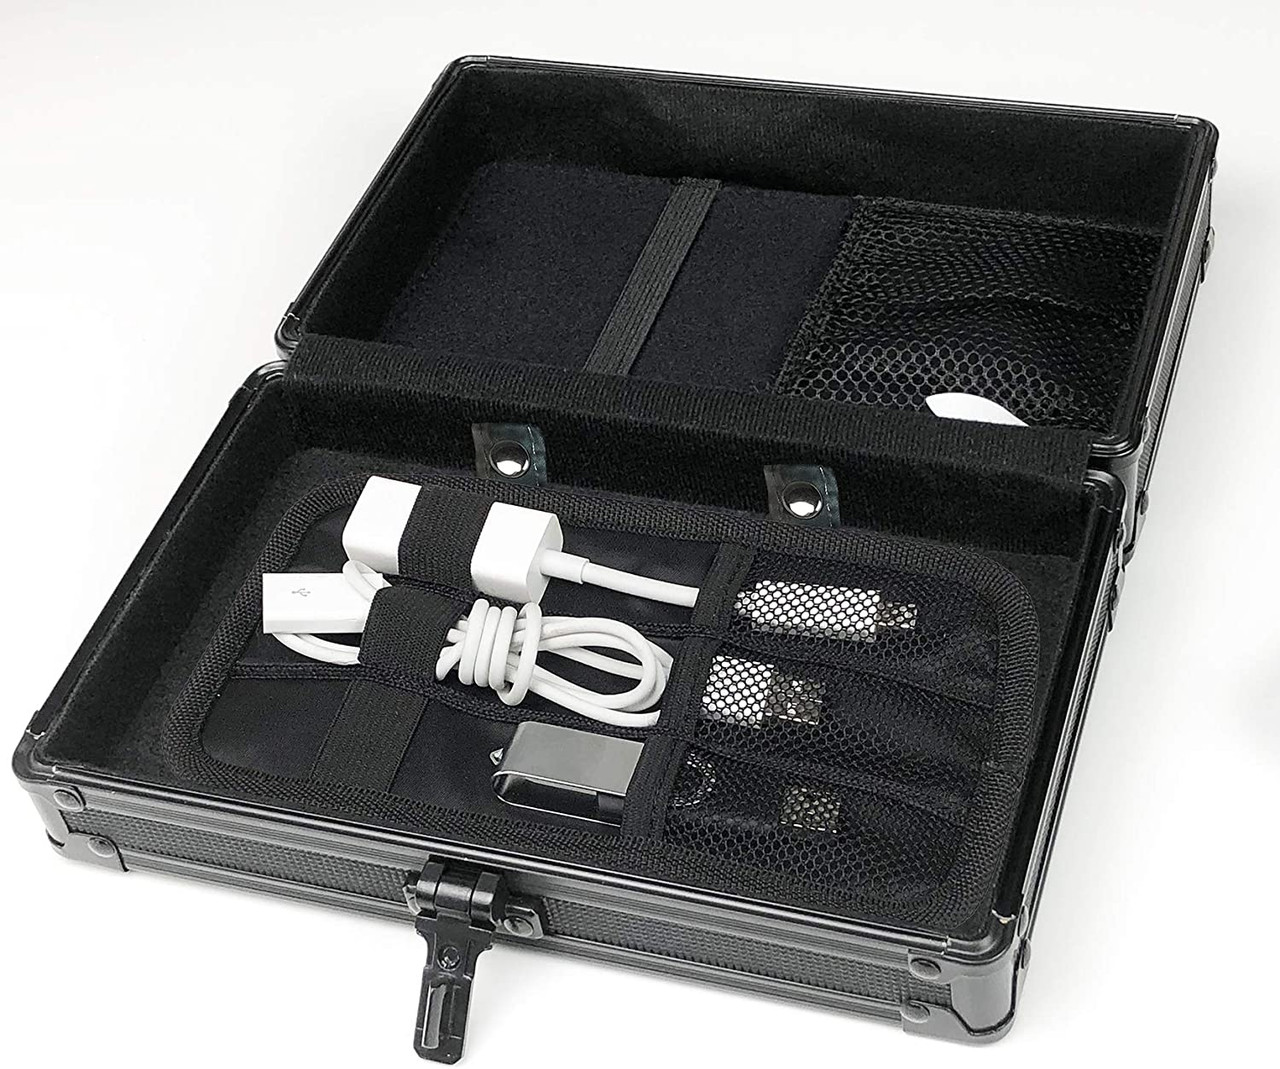 Vaultz Locking Personal Electronics Storage Box, Tactical Black